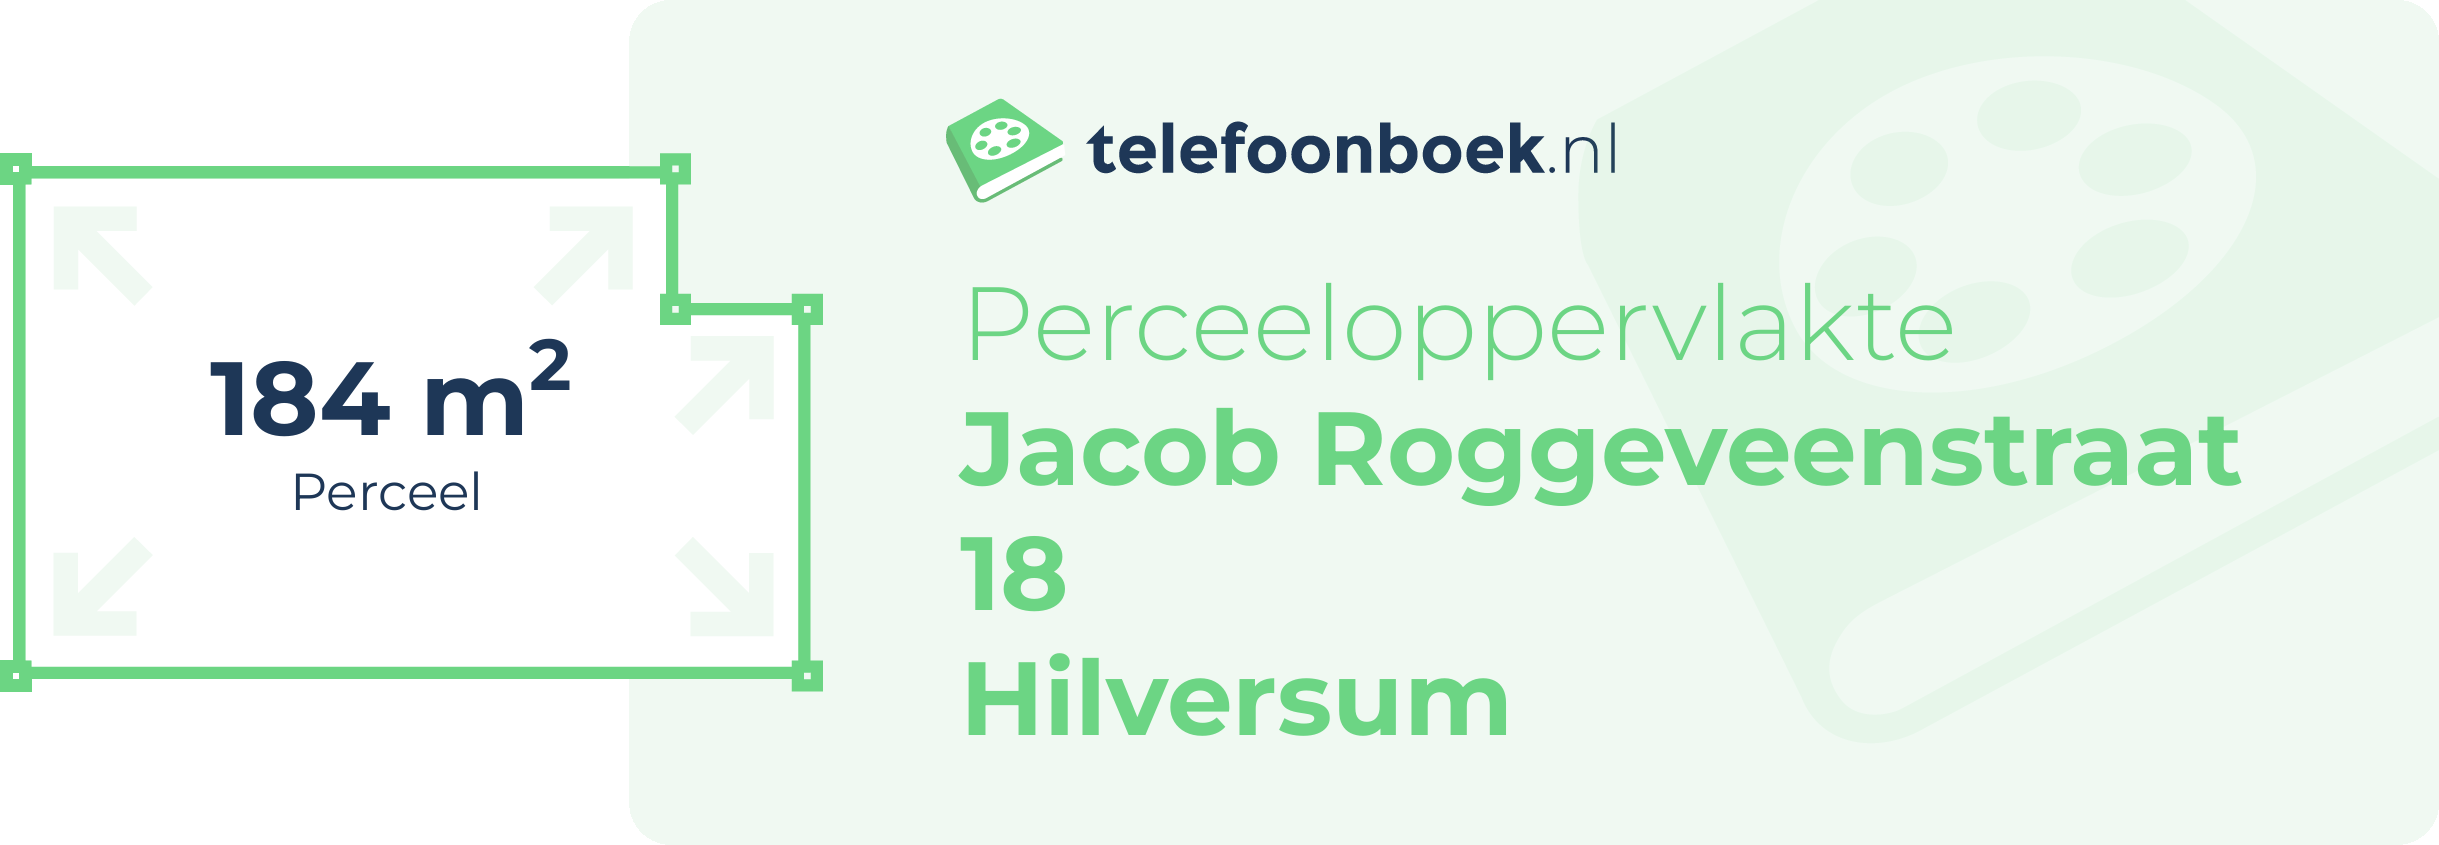 Perceeloppervlakte Jacob Roggeveenstraat 18 Hilversum